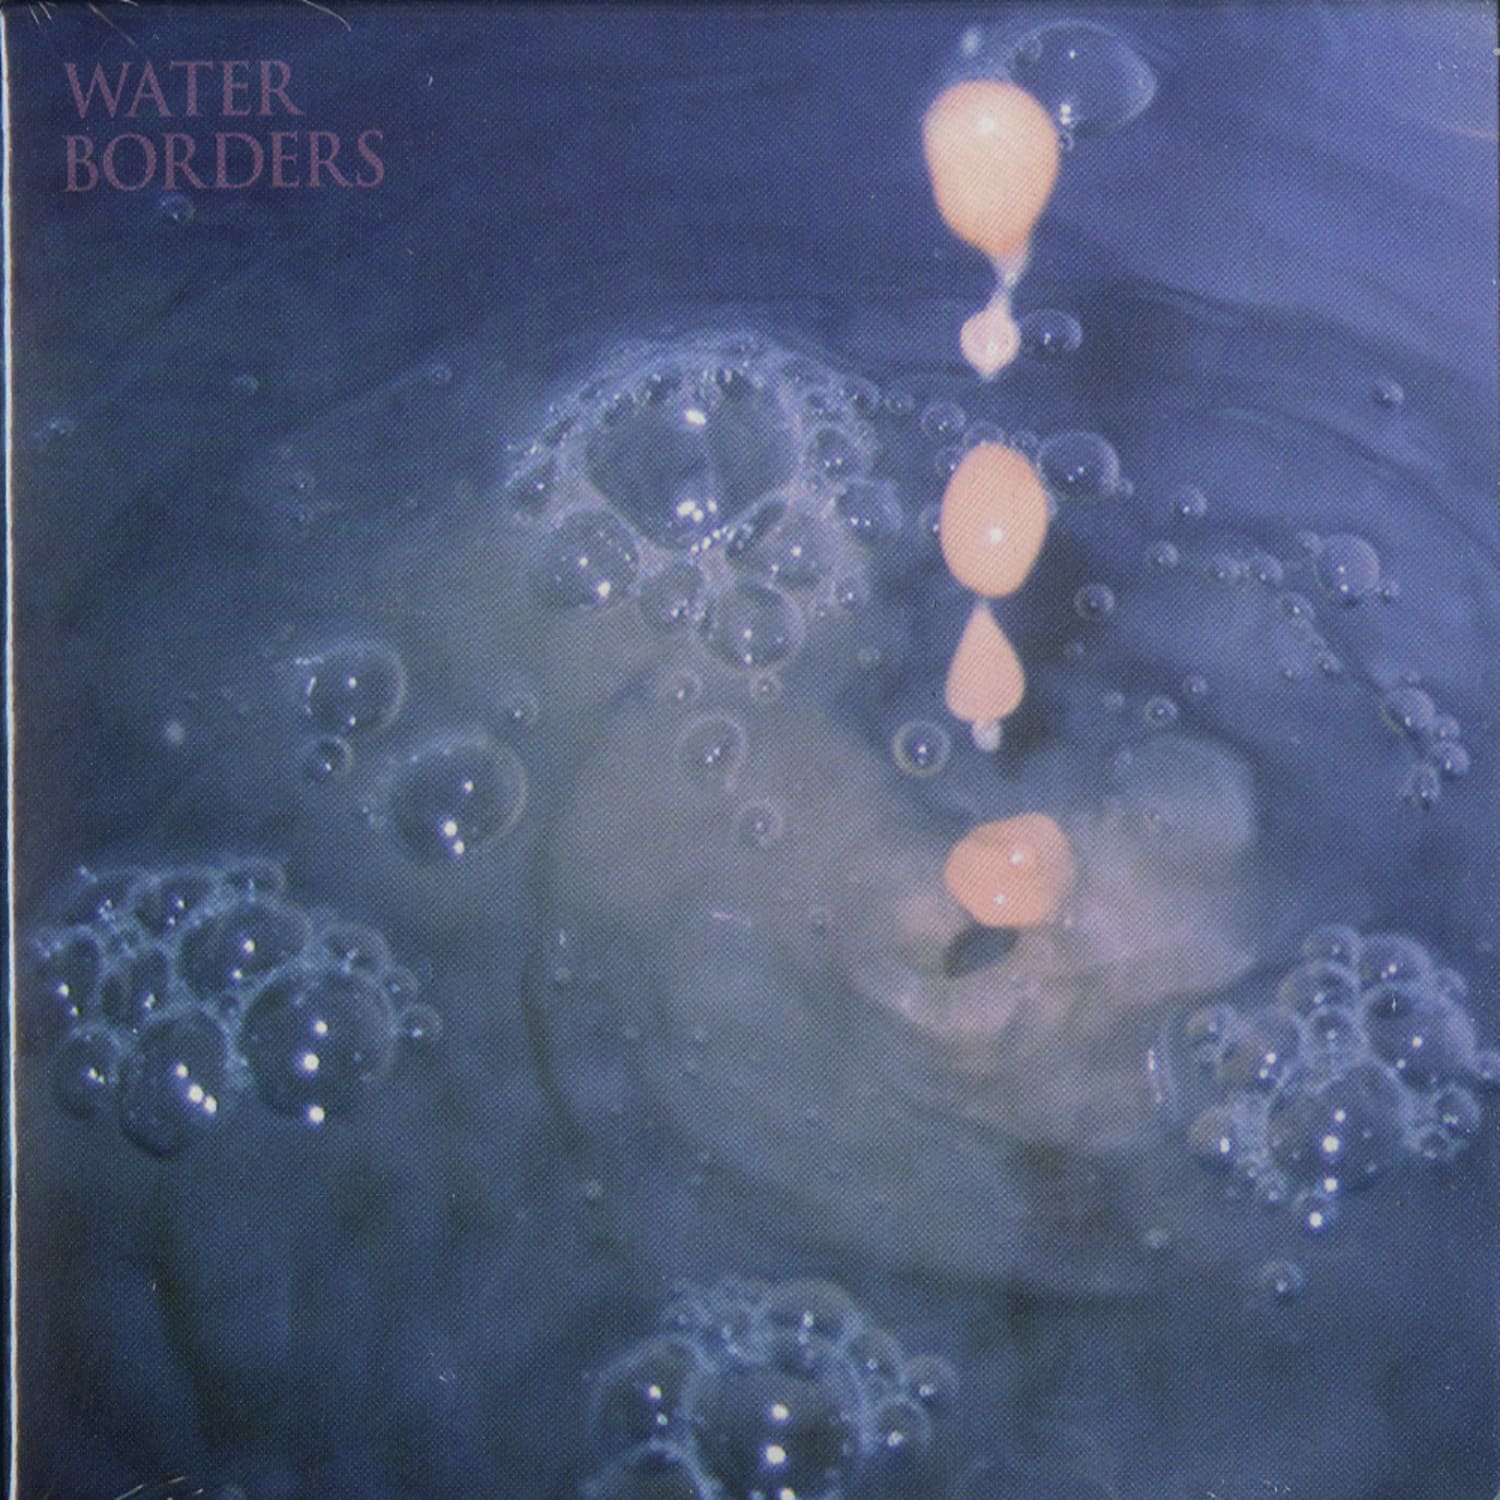 Water Borders - Harbored Mantras 